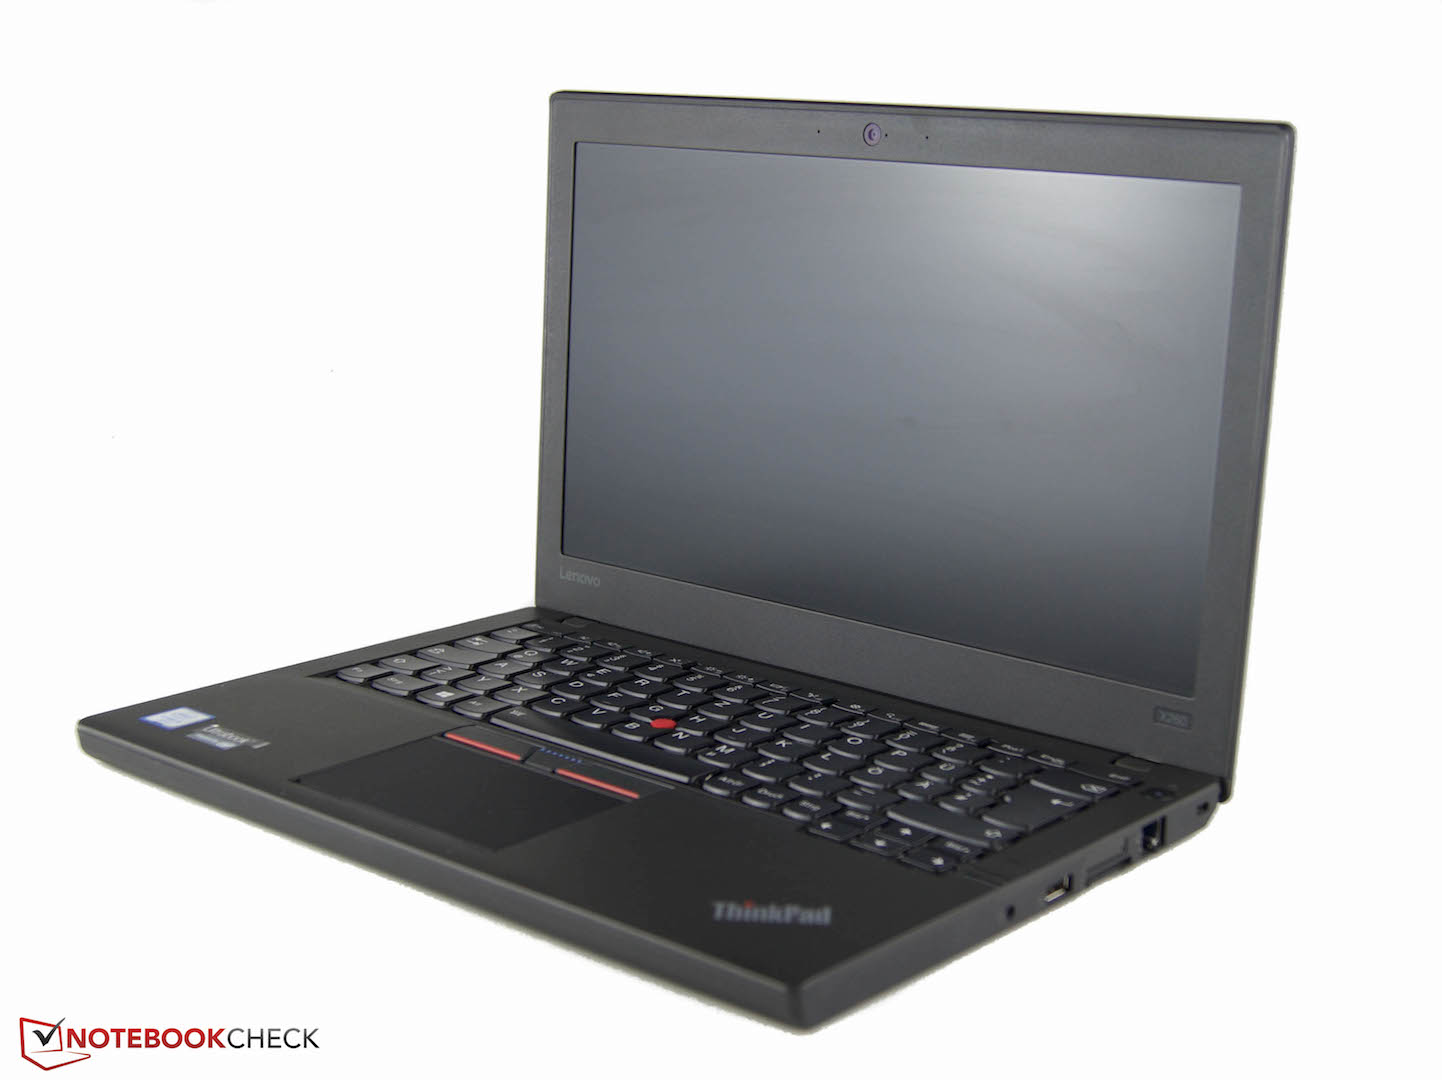 Lenovo ThinkPad X260 (Core i7, FHD) Subnotebook Review 